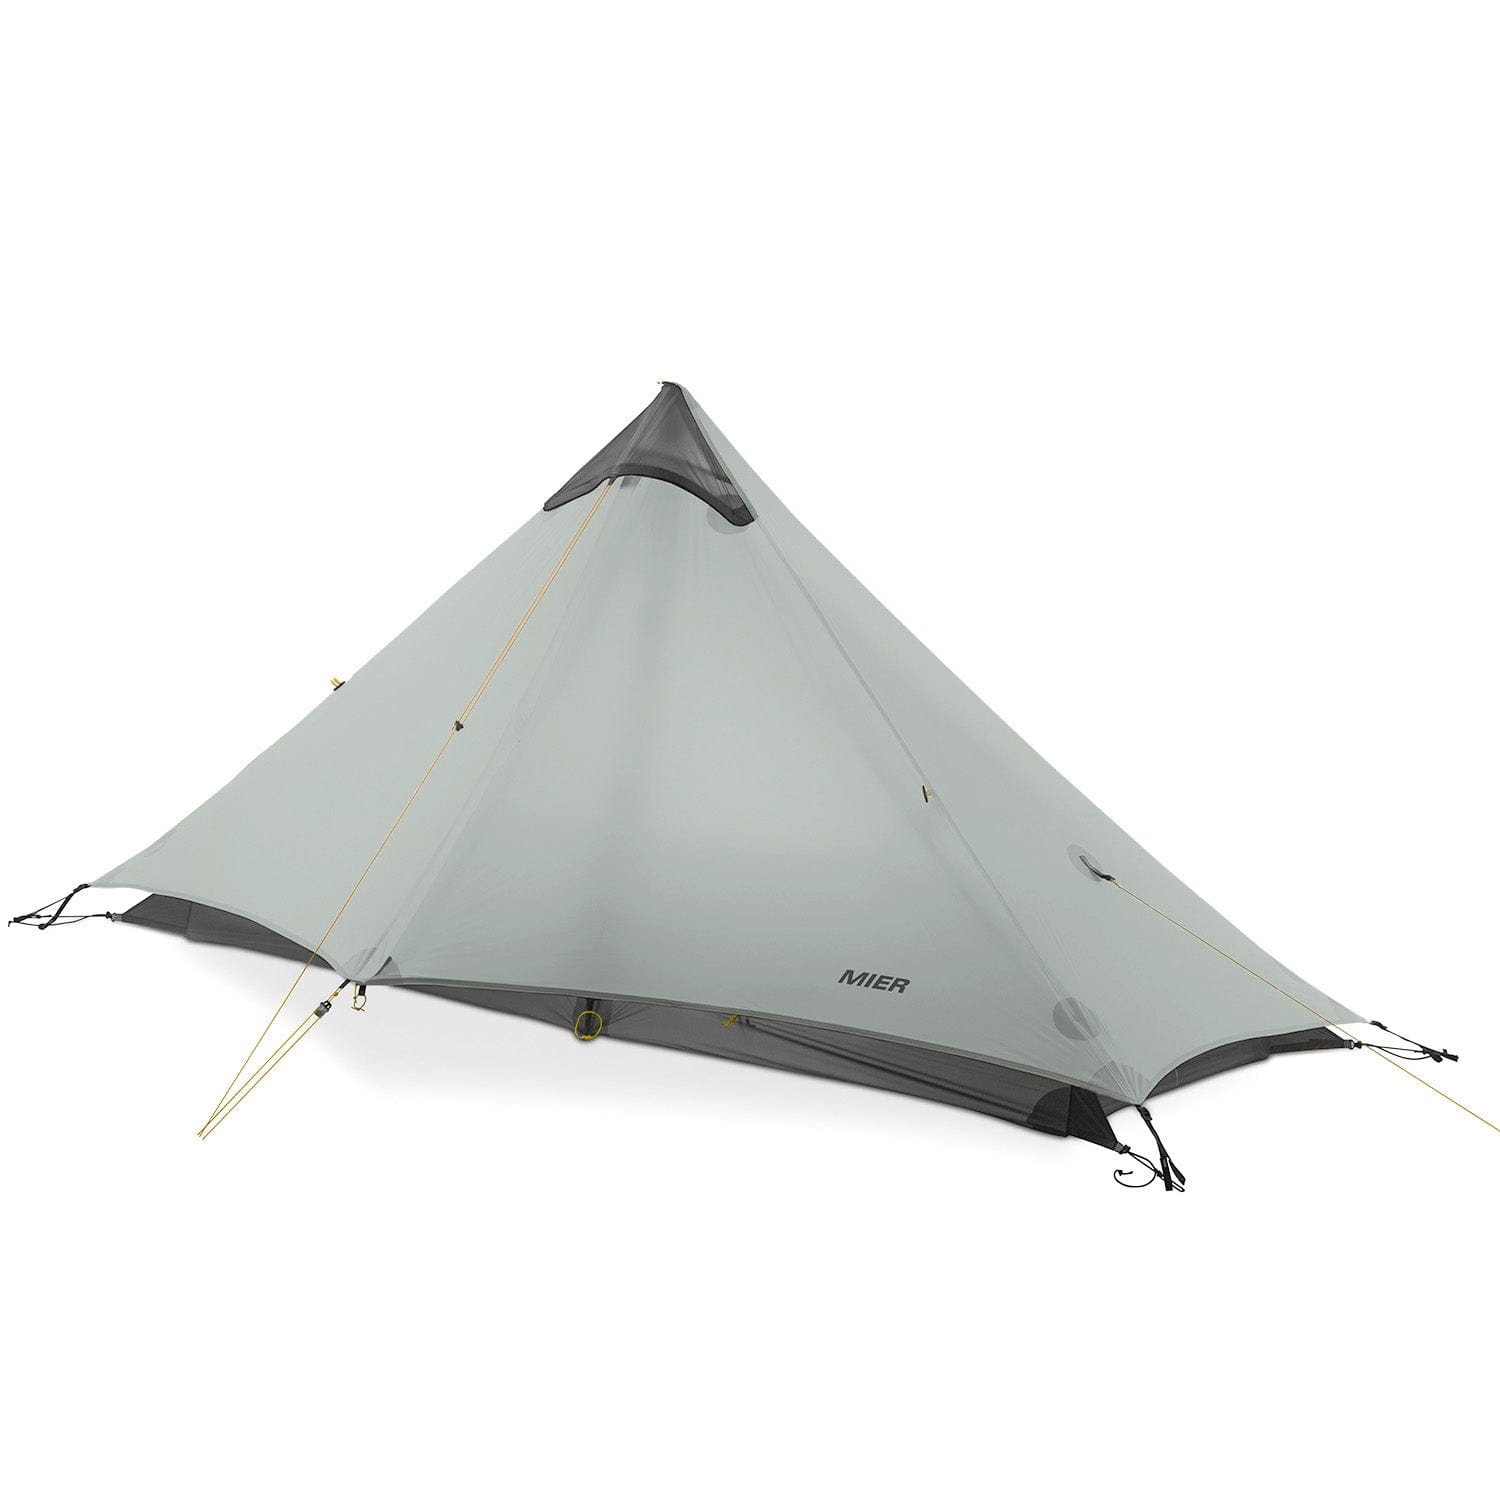 Lanshan 1 Person Ultralight Backpacking Tent Camping Tent Lanshan Tent Grey / 1-Person MIER